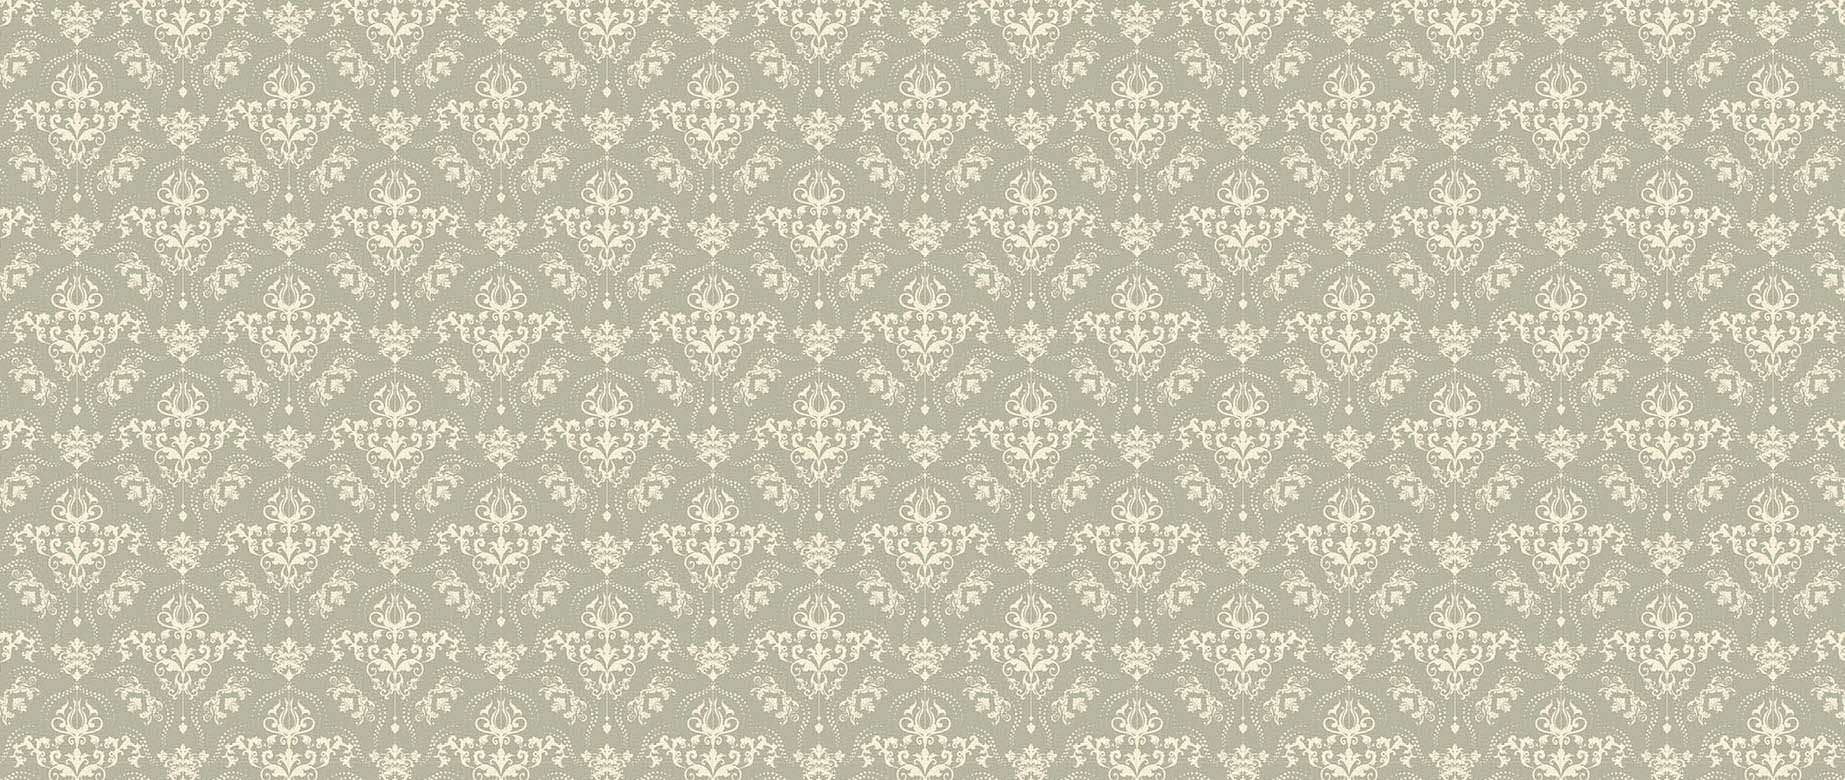 green-classic-damask-pattern-wallpaper-view